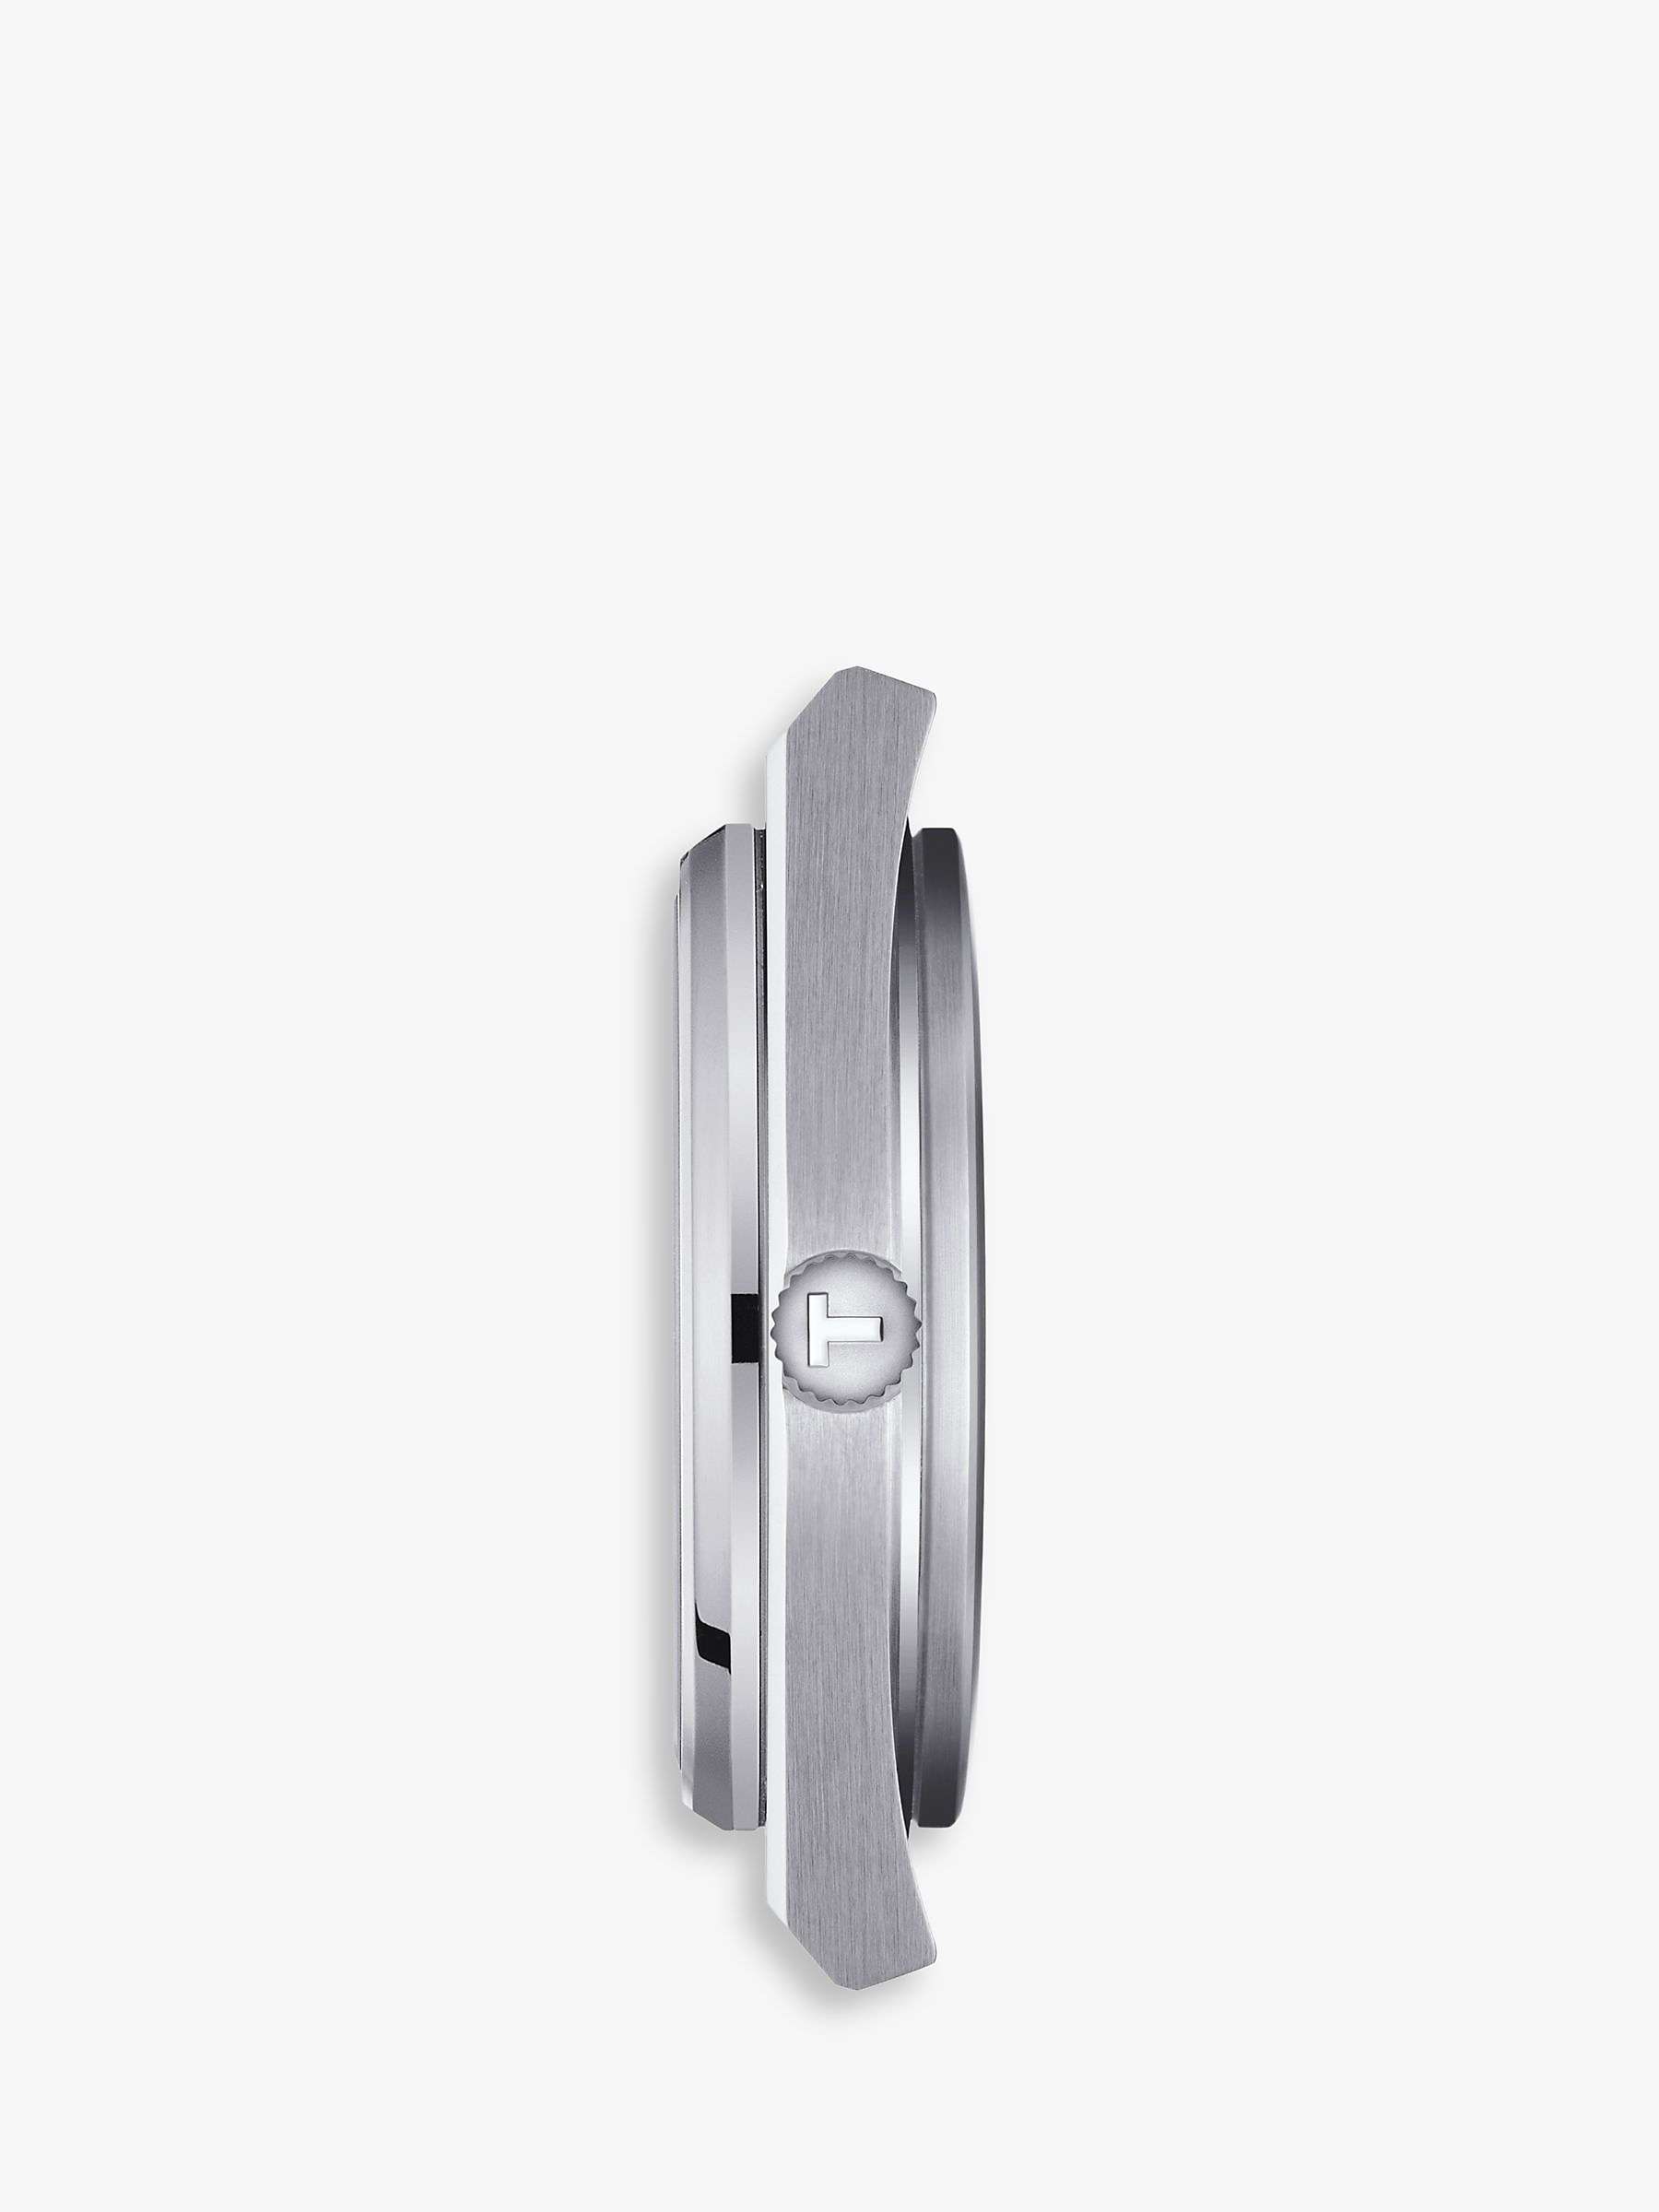 Buy Tissot T1374071109100 Men's PRX Automatic Powermatic 80 Date Bracelet Strap Watch, Silver/Green Online at johnlewis.com